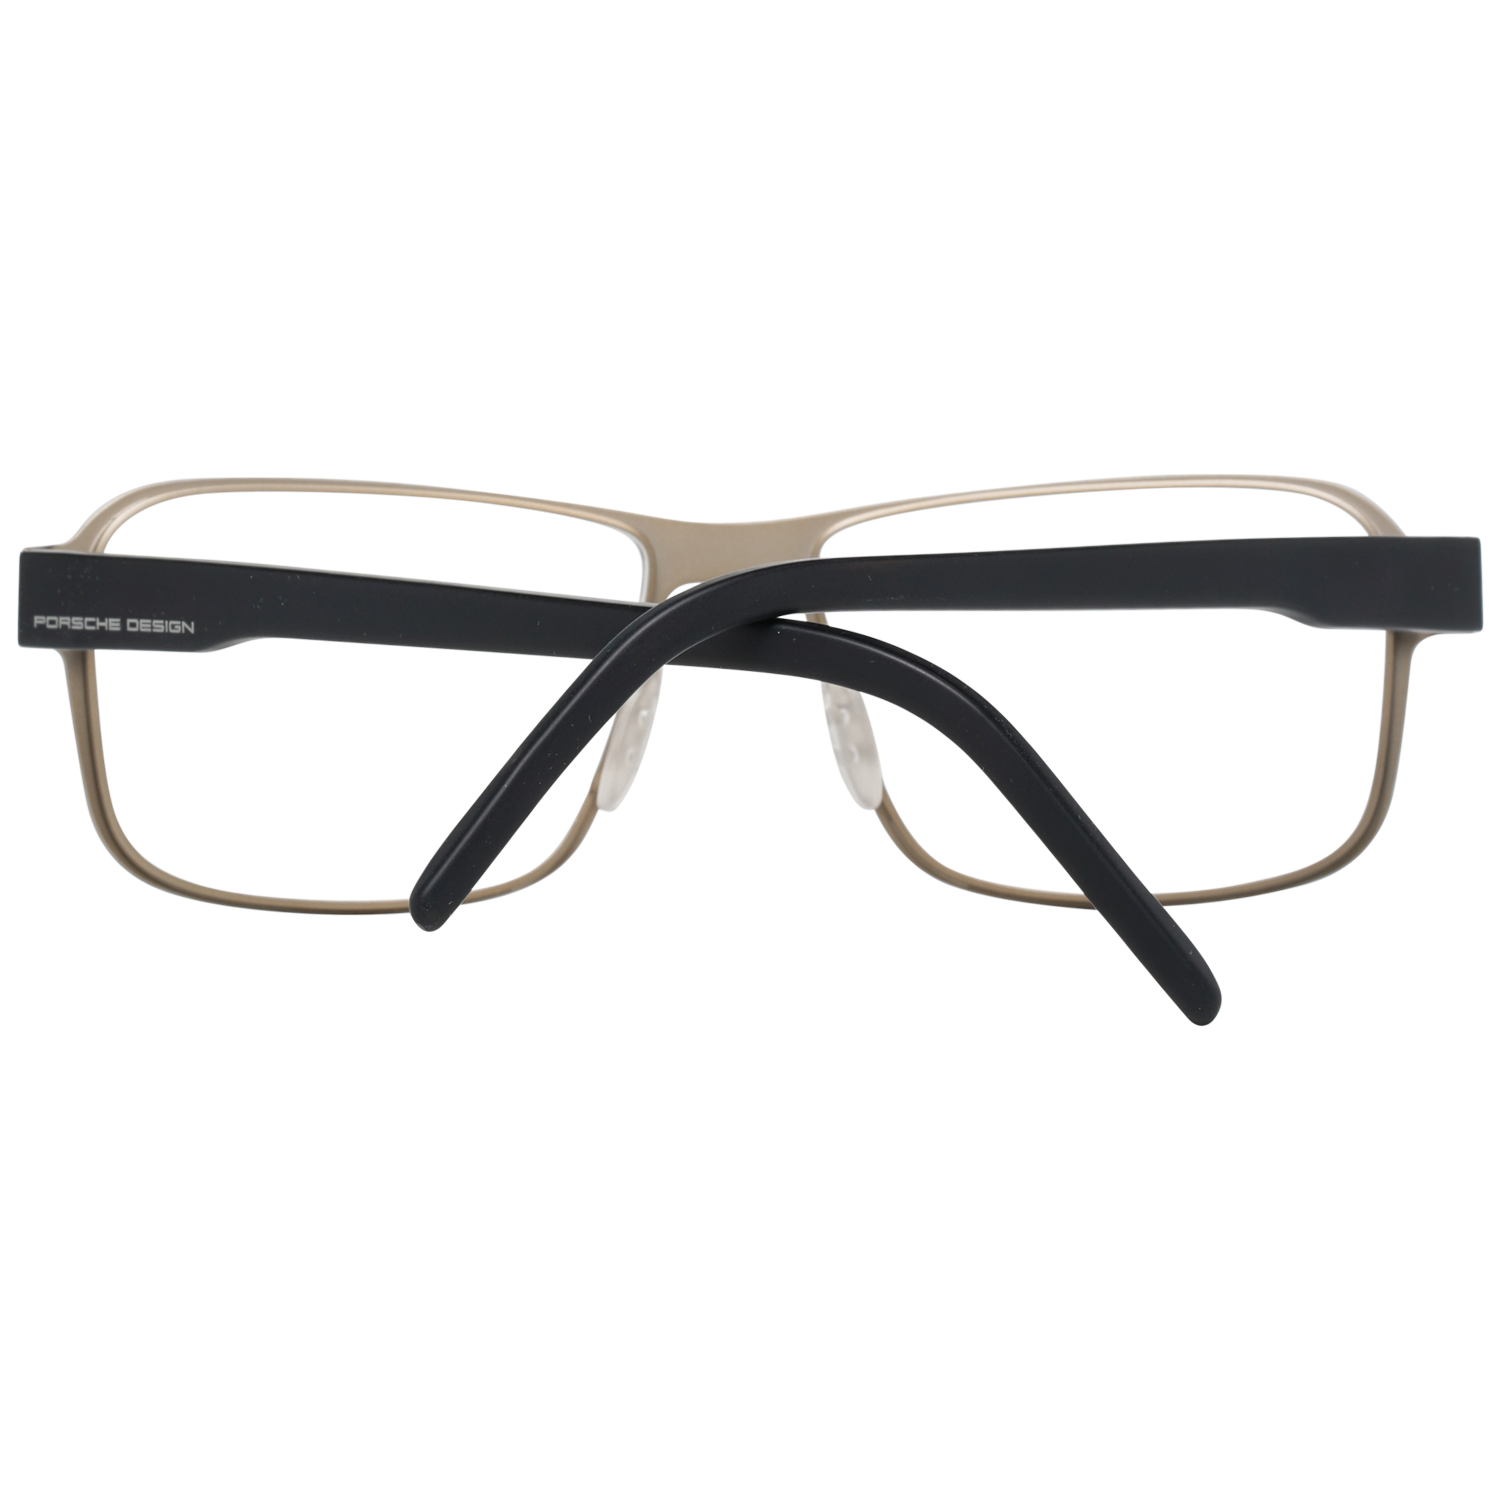 Porsche Design Eyeglasses Porsche Design Glasses Frames P8290 D 56 Eyeglasses Eyewear UK USA Australia 